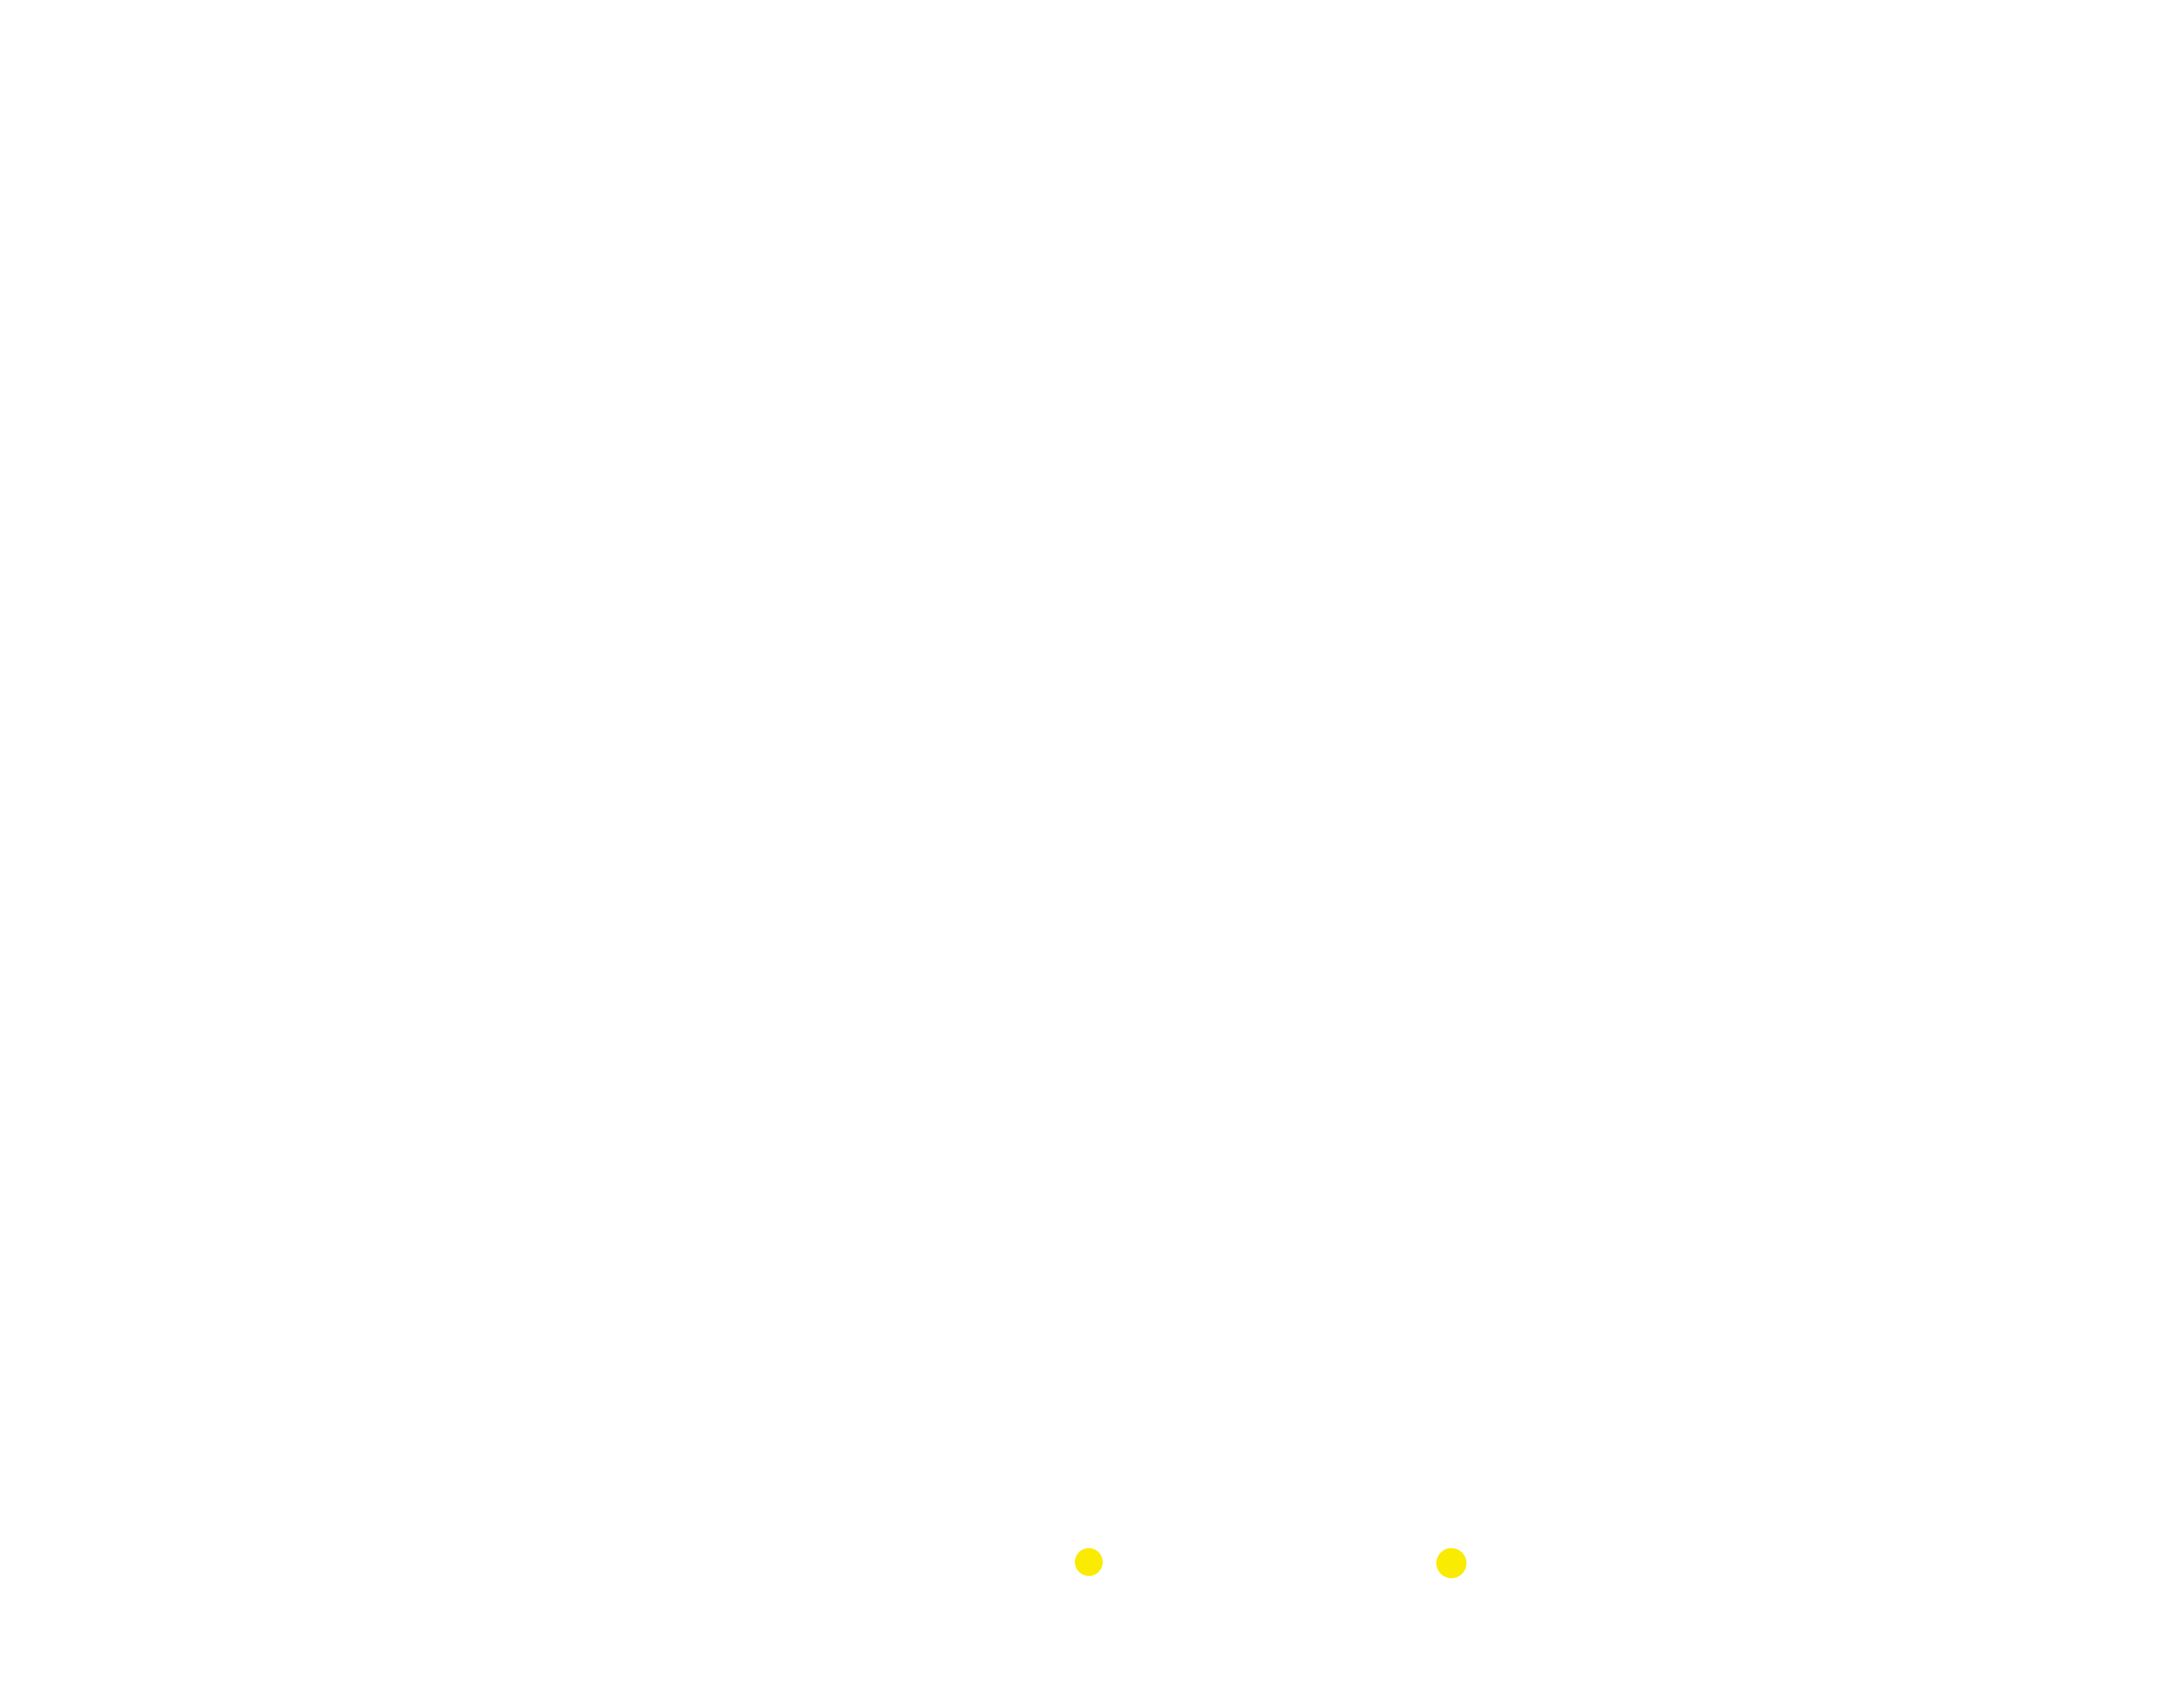 Restoration Church